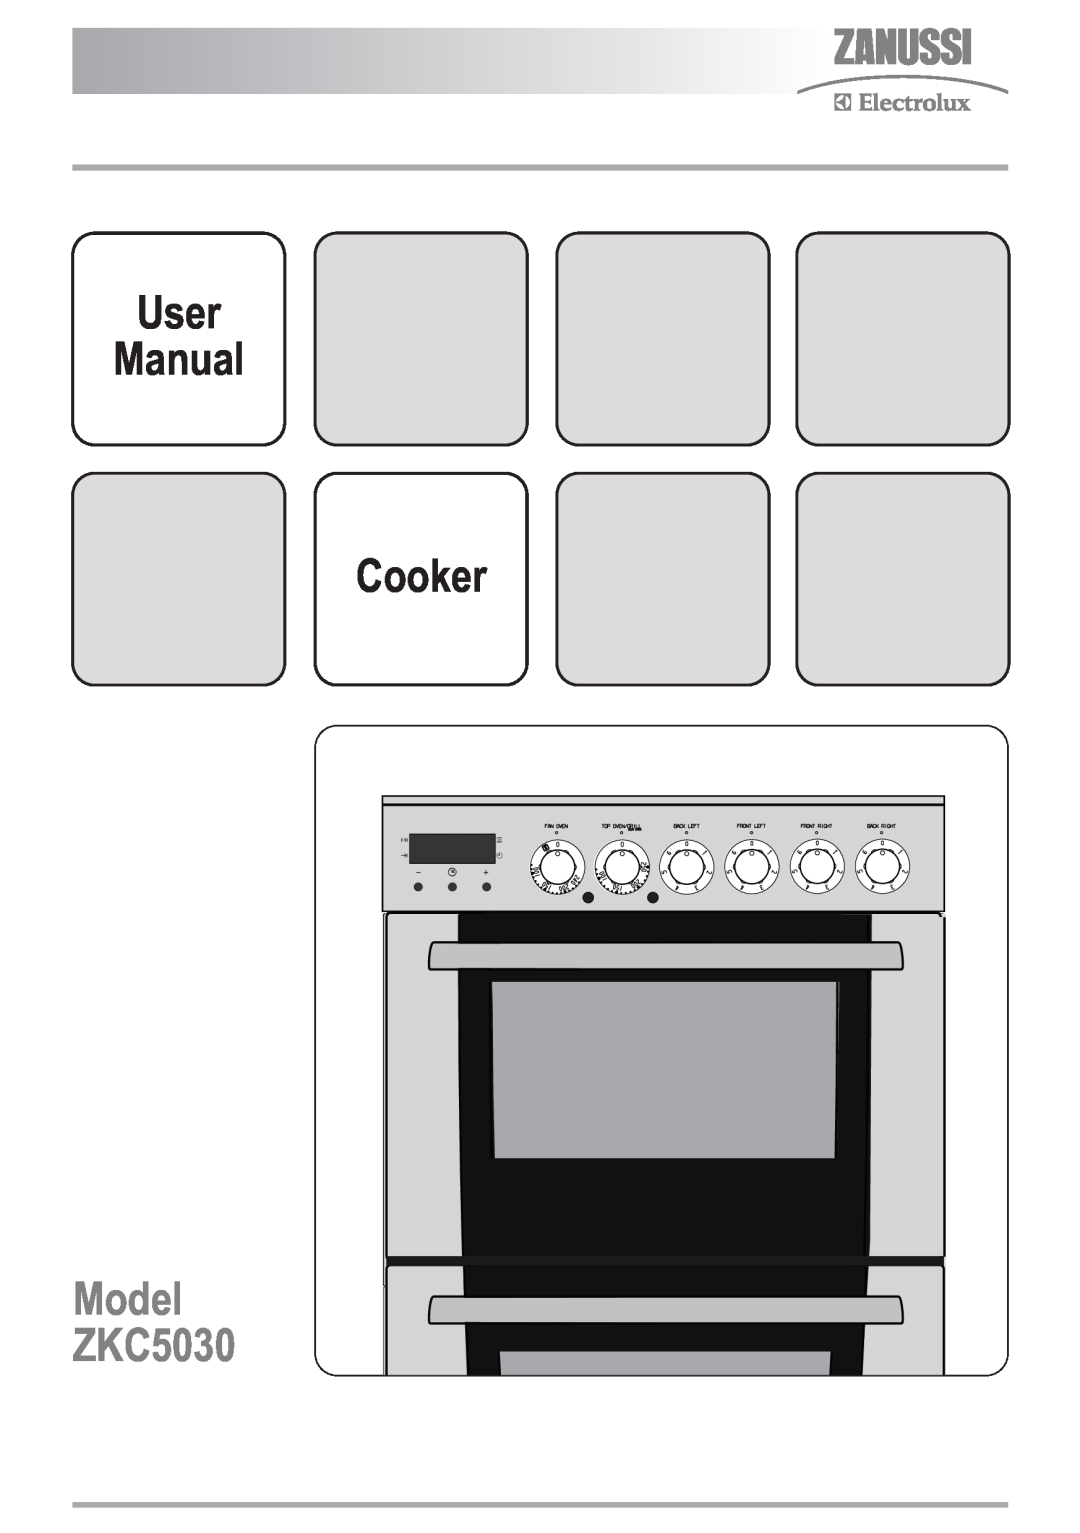 Zanussi user manual User Manual Cooker, Model ZKC5030 